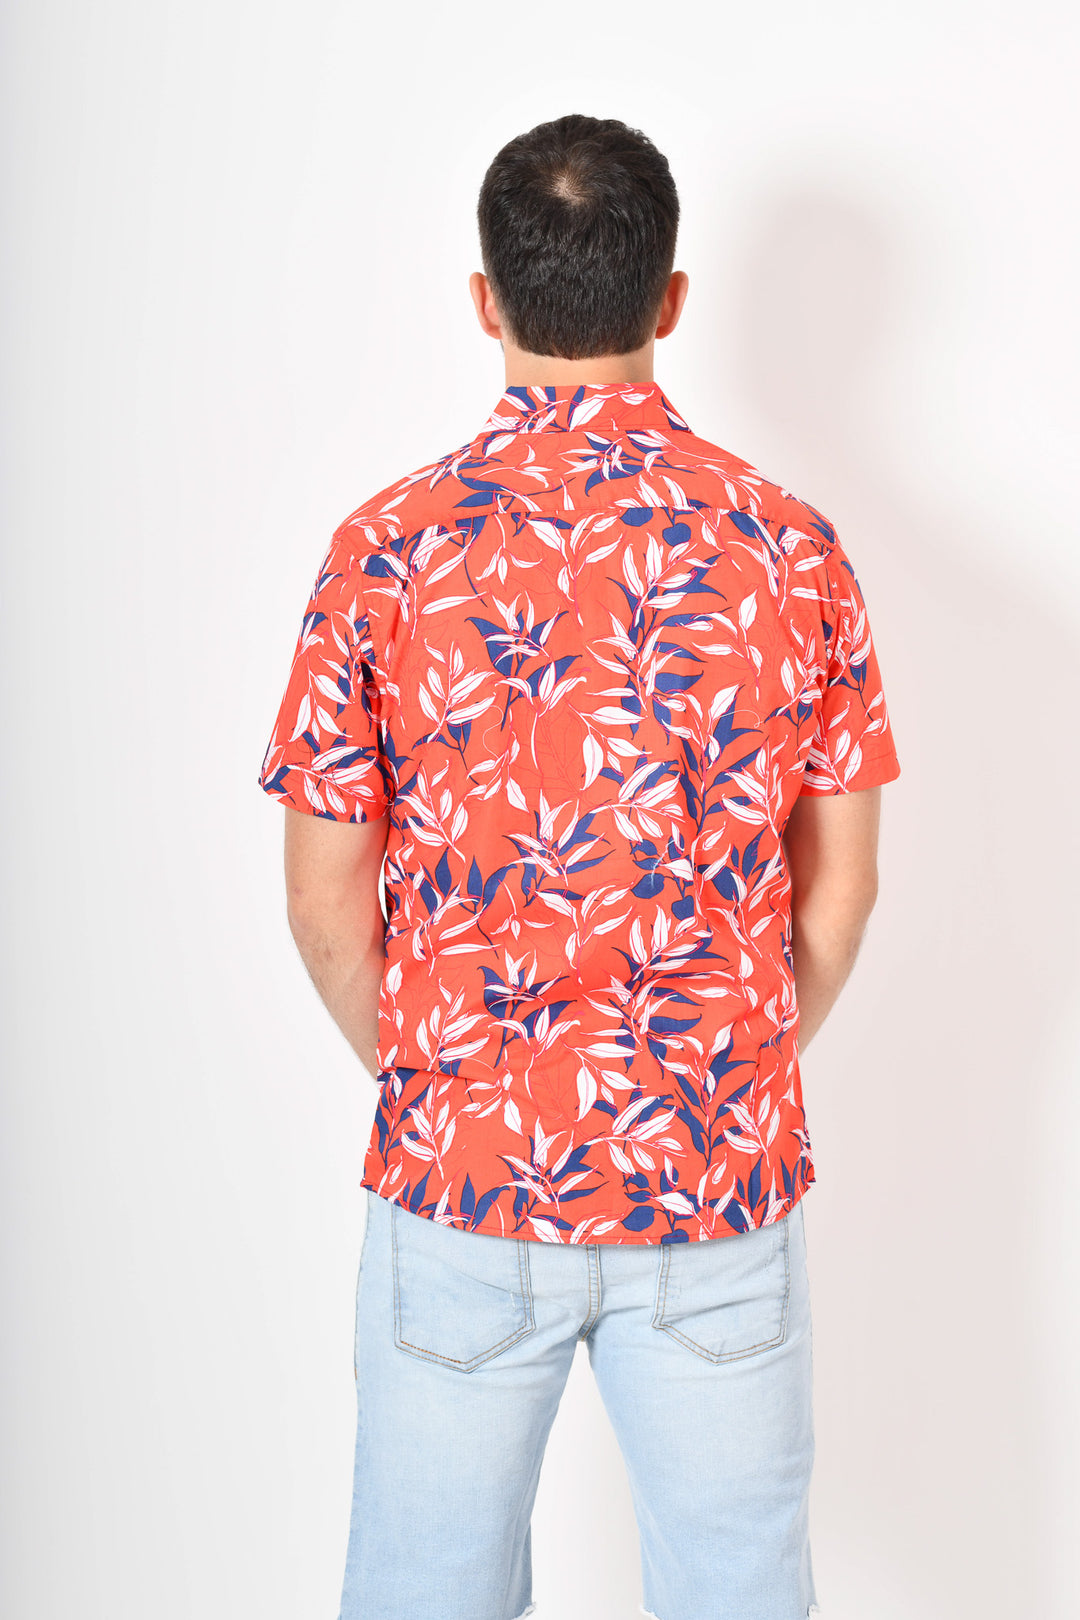 Camisa tropical de flores -  roja blanca